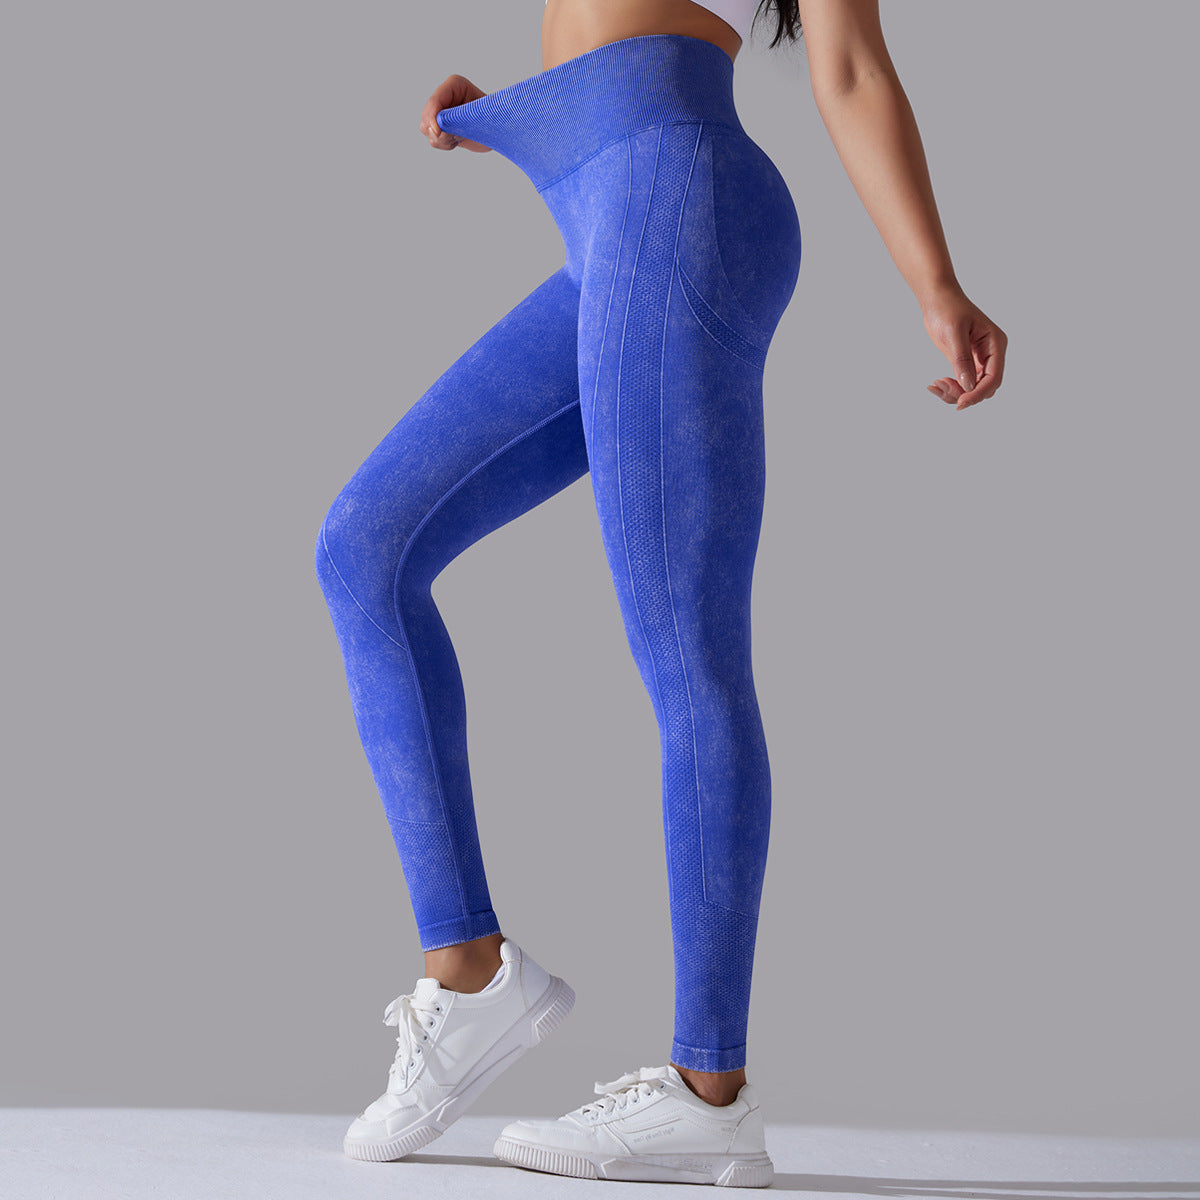 Knitted Seamless Yoga Pants Running Sports Fitness High Waist Butt Lifting Leggings Womens Clothing